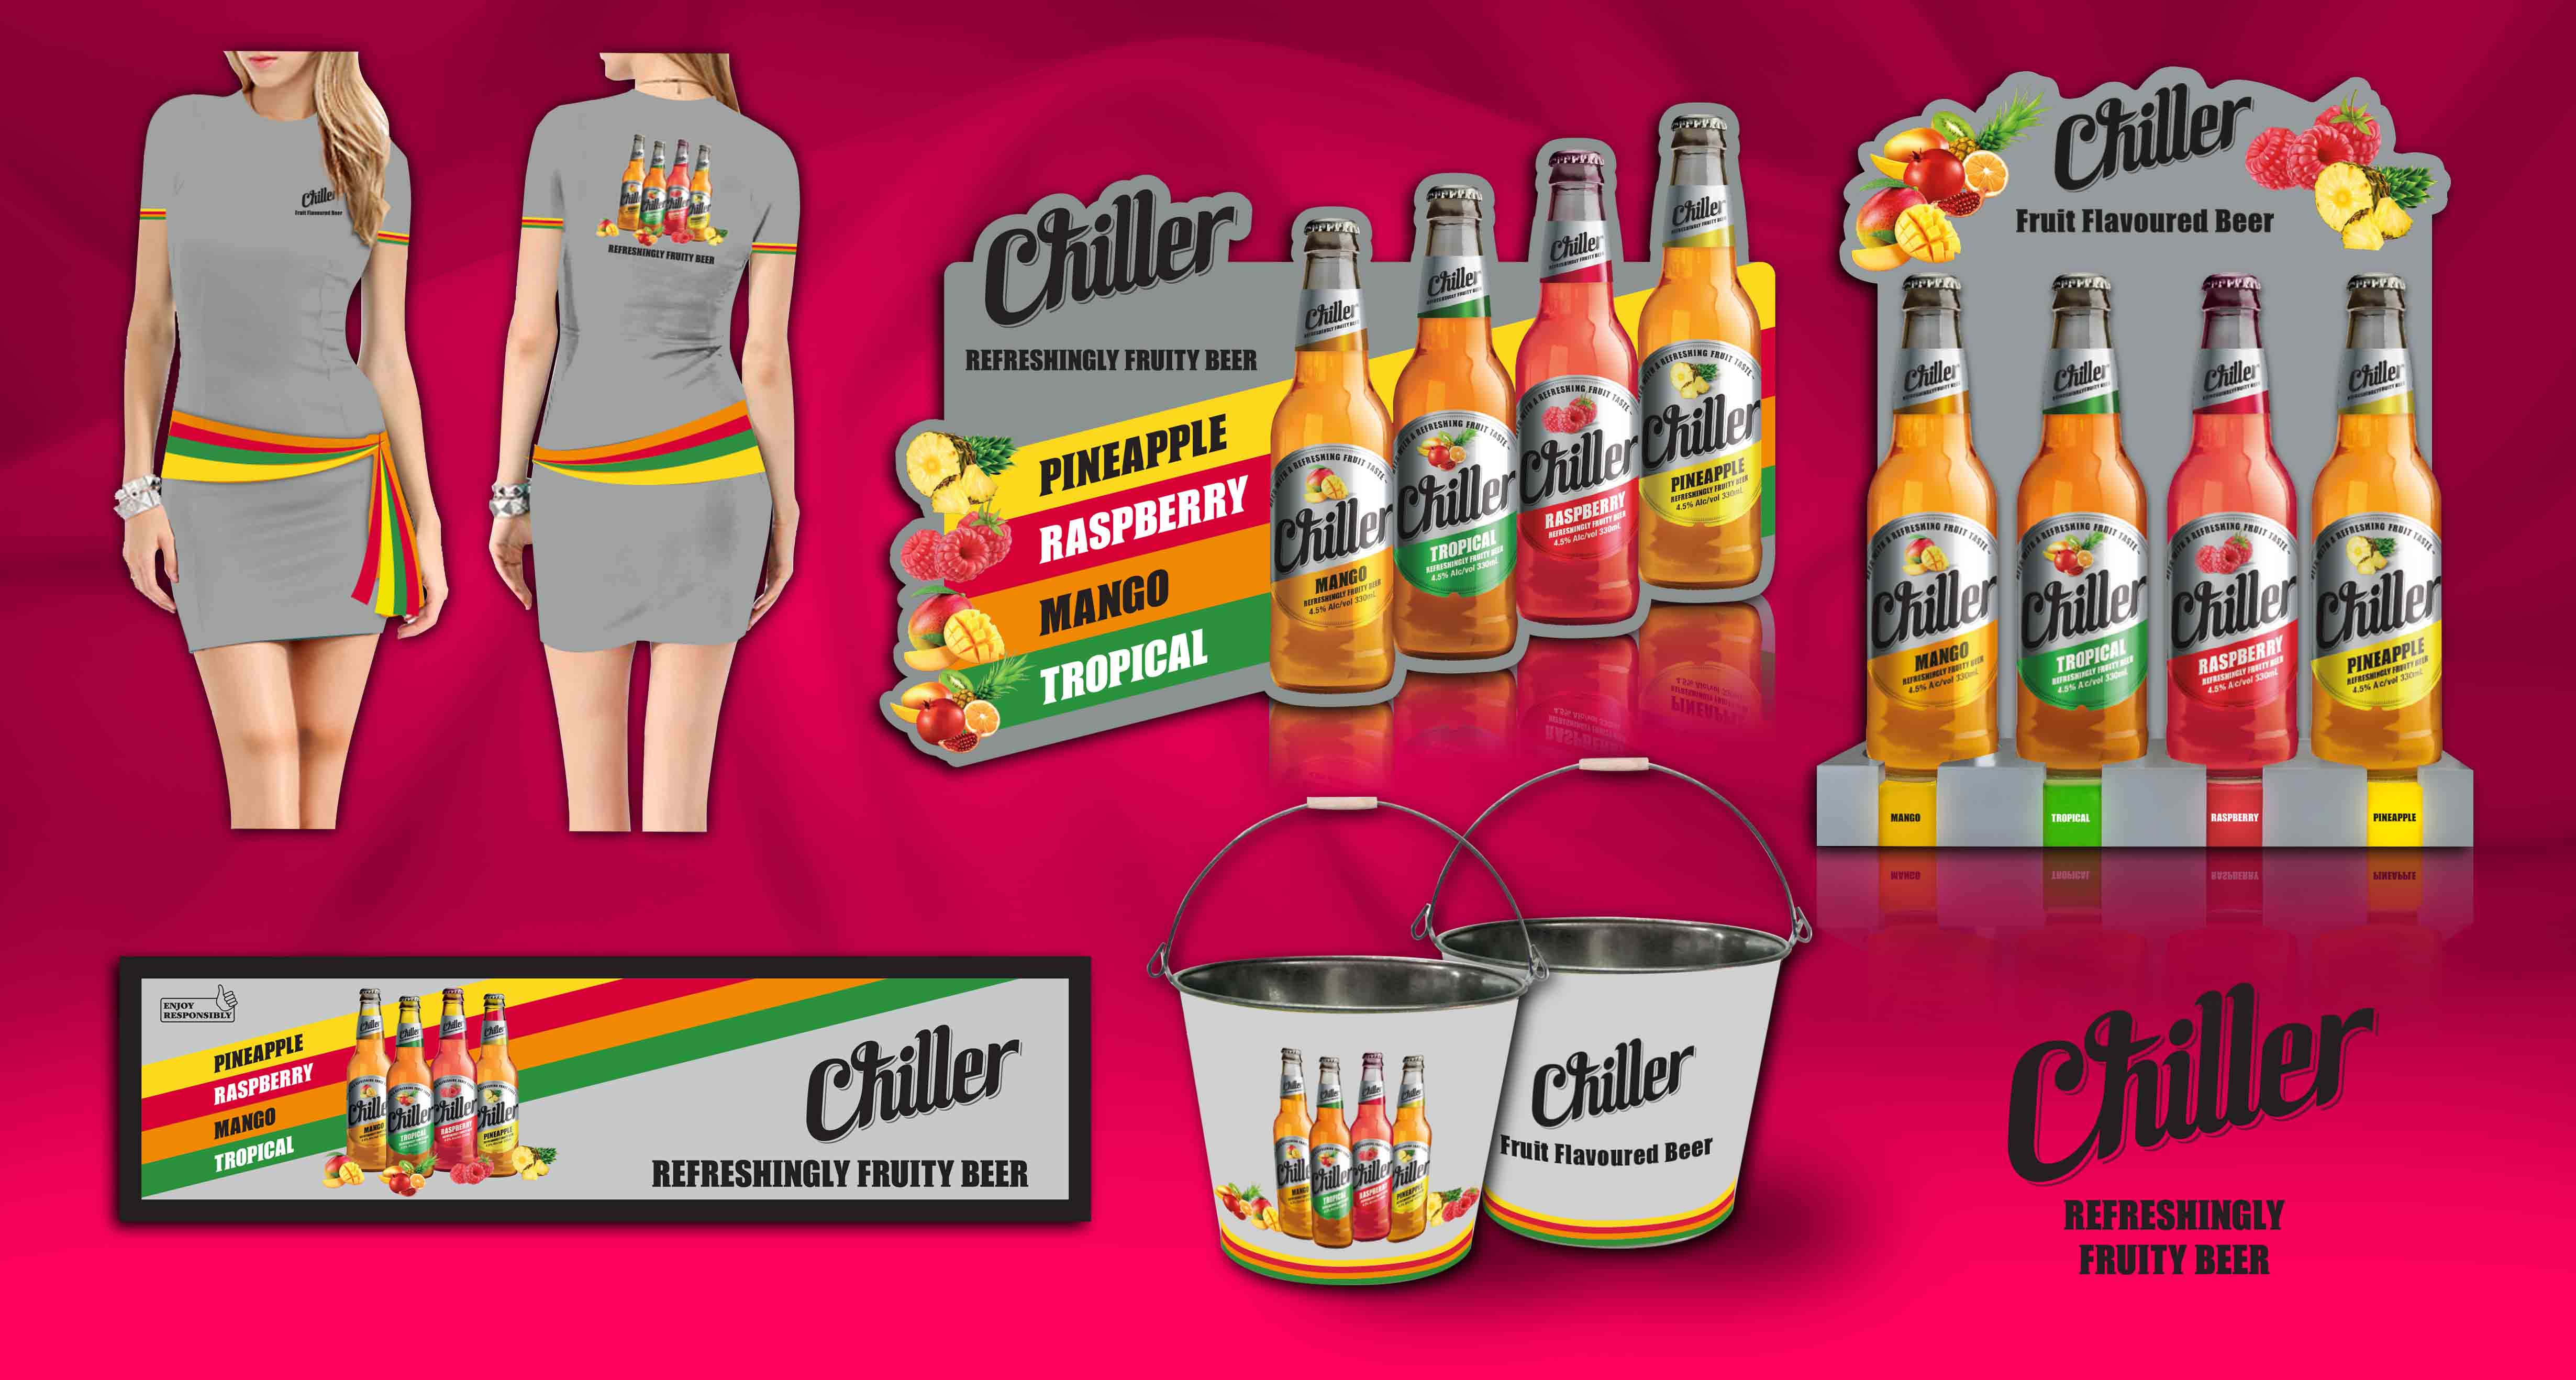 Chiller Promoter Uniform & POSM items